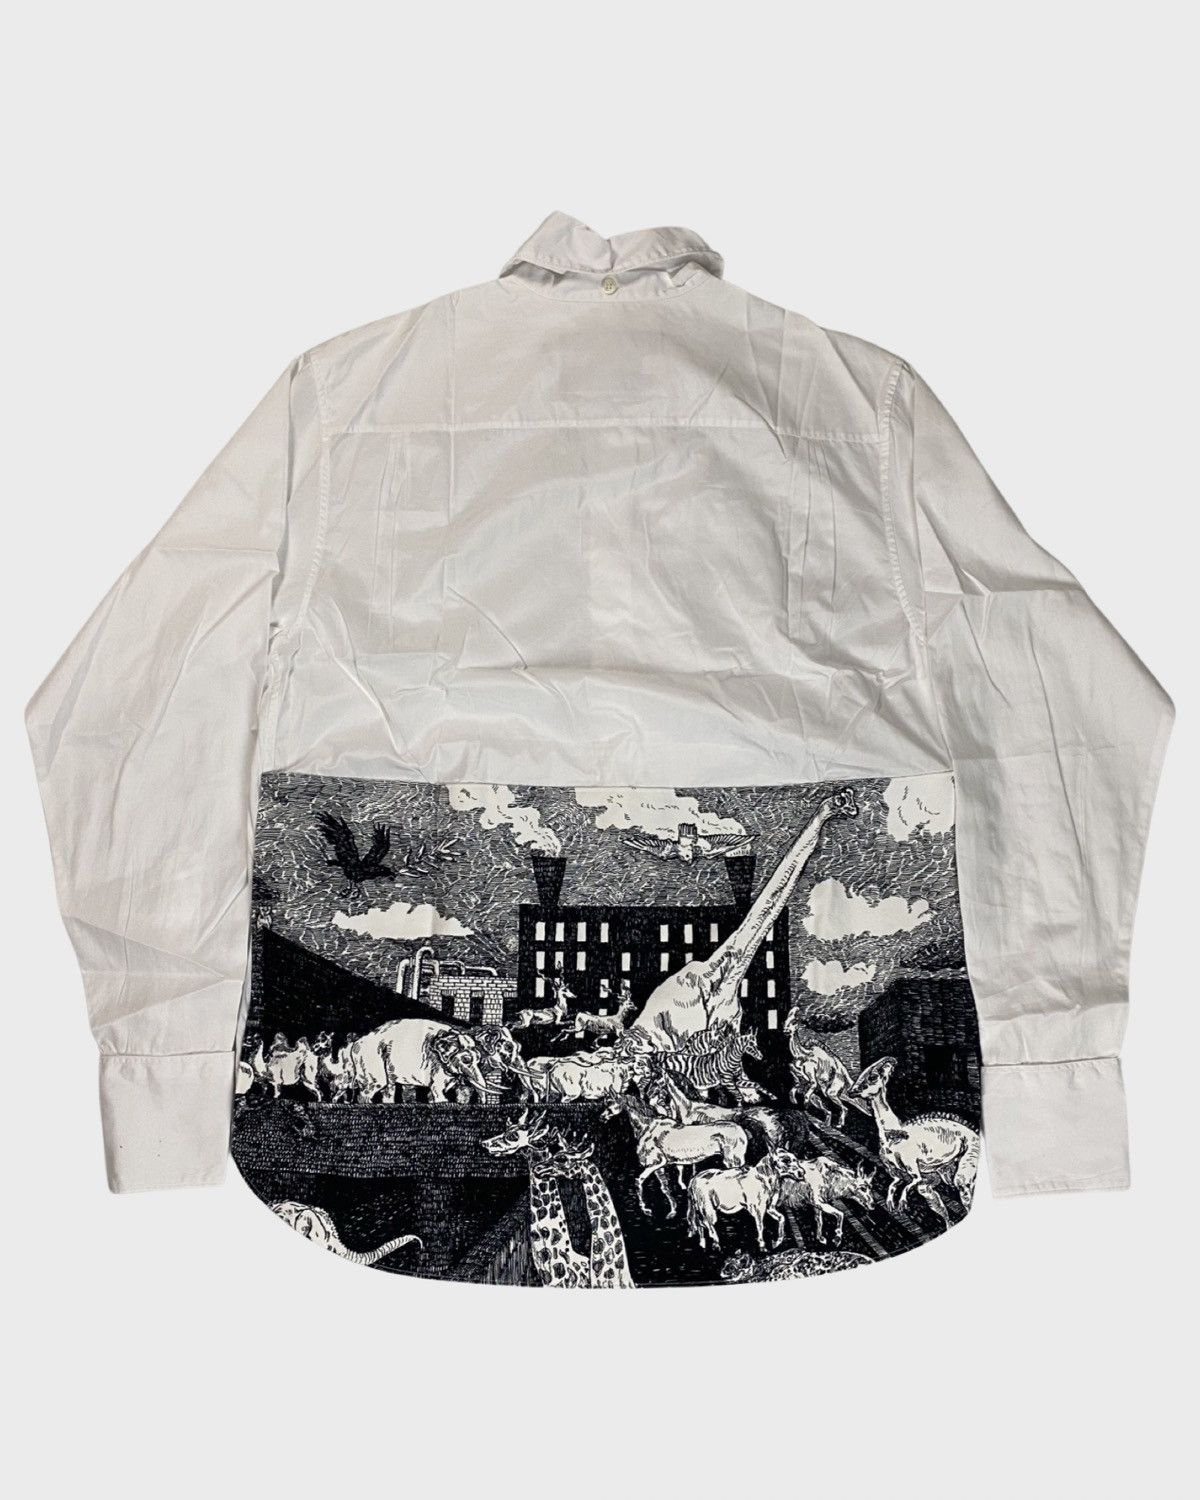 Prada 1of1 AW16 Christophe Chemin survival utopia shirt | Grailed